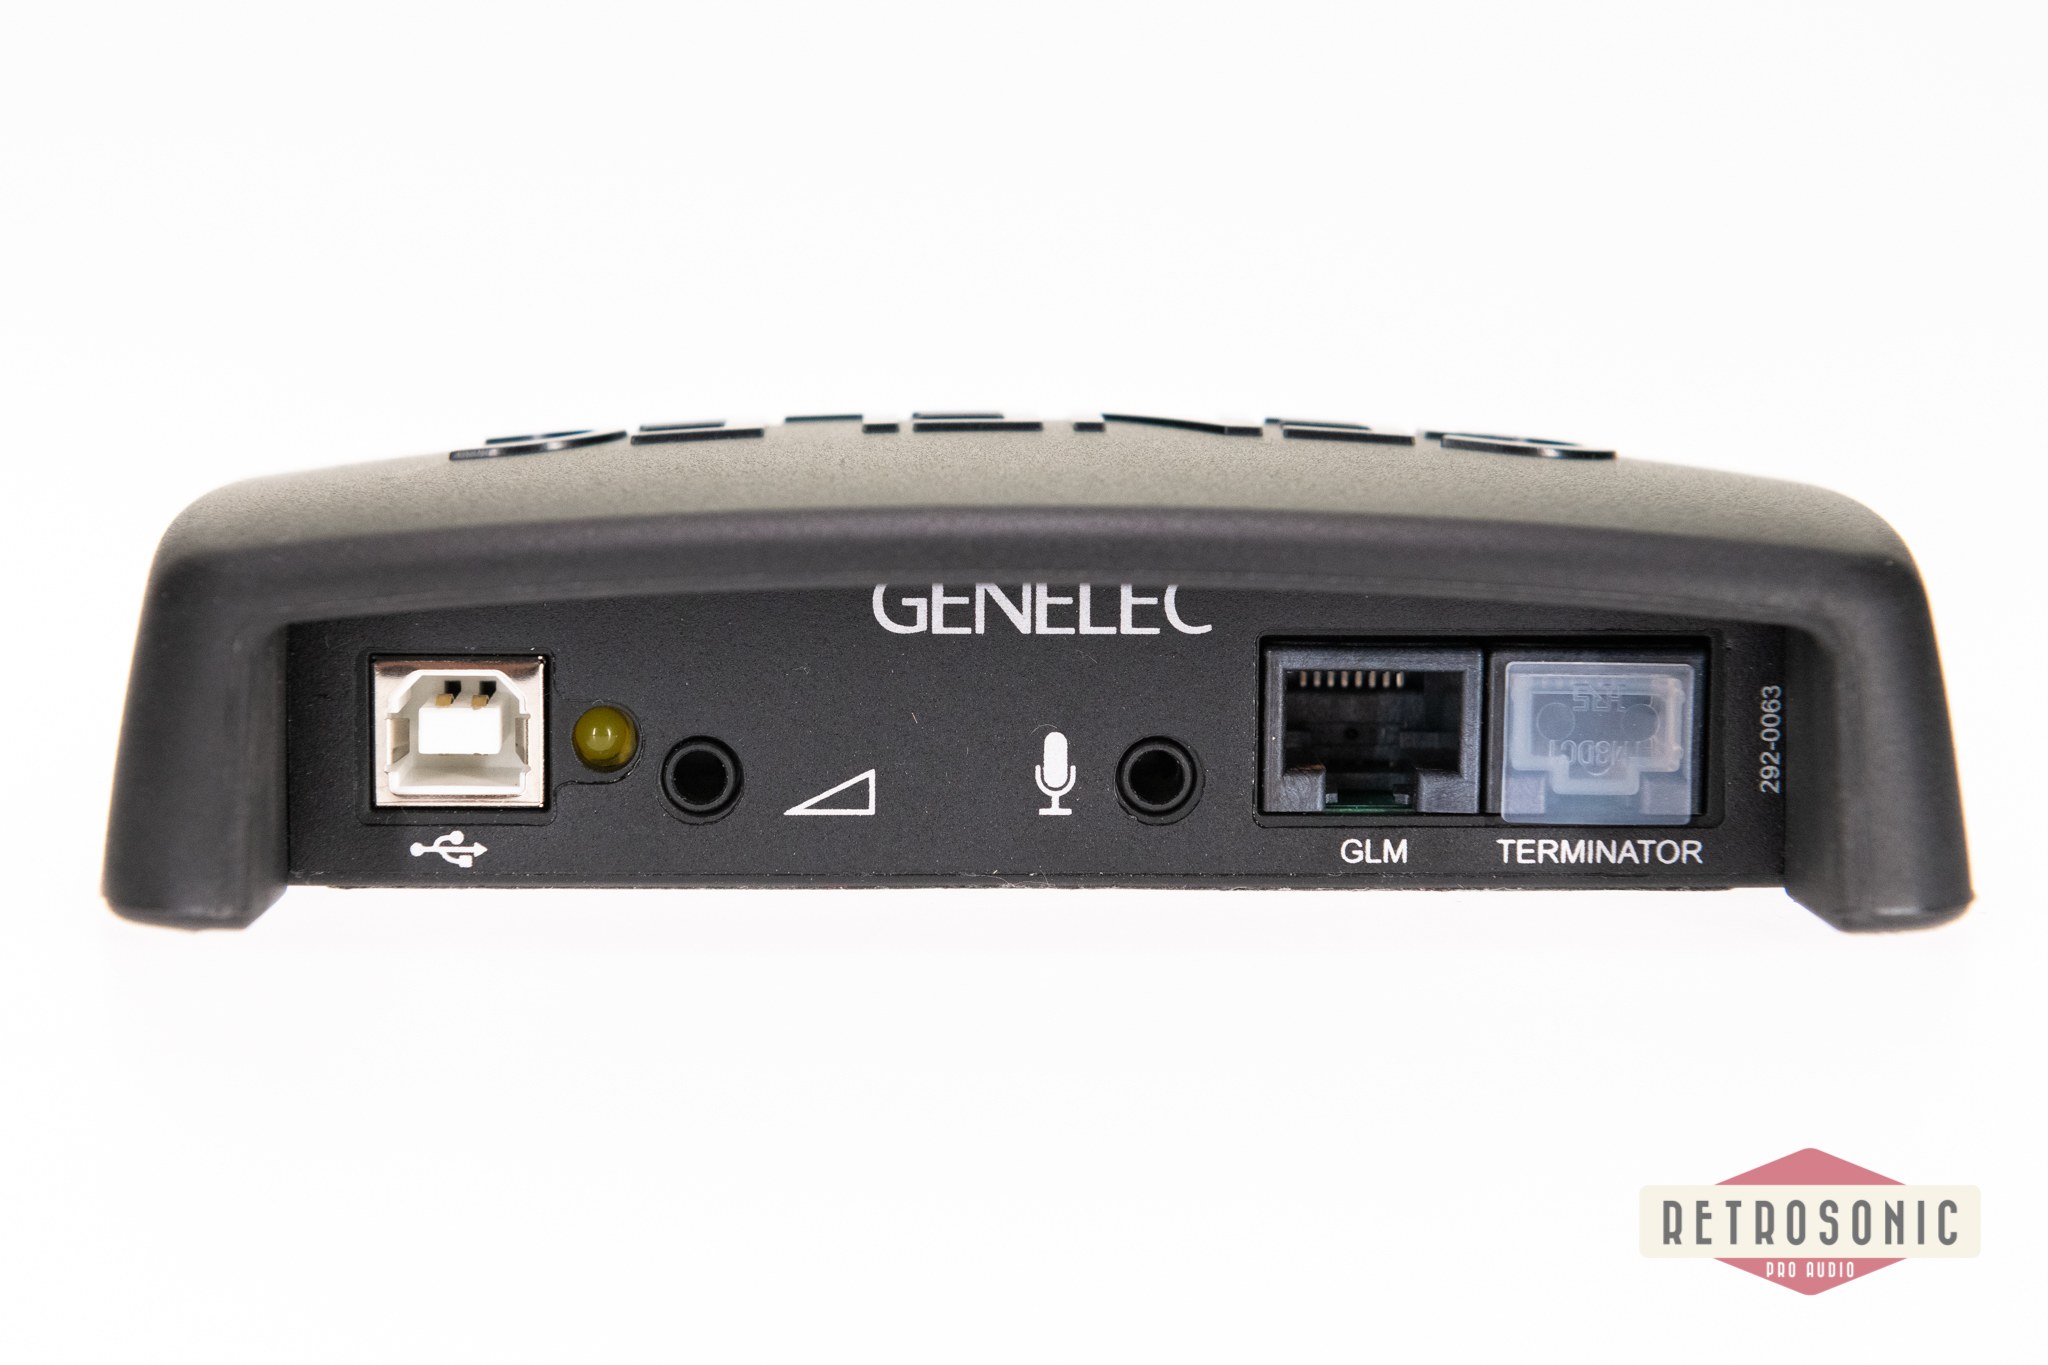 Genelec GLM3 Kit